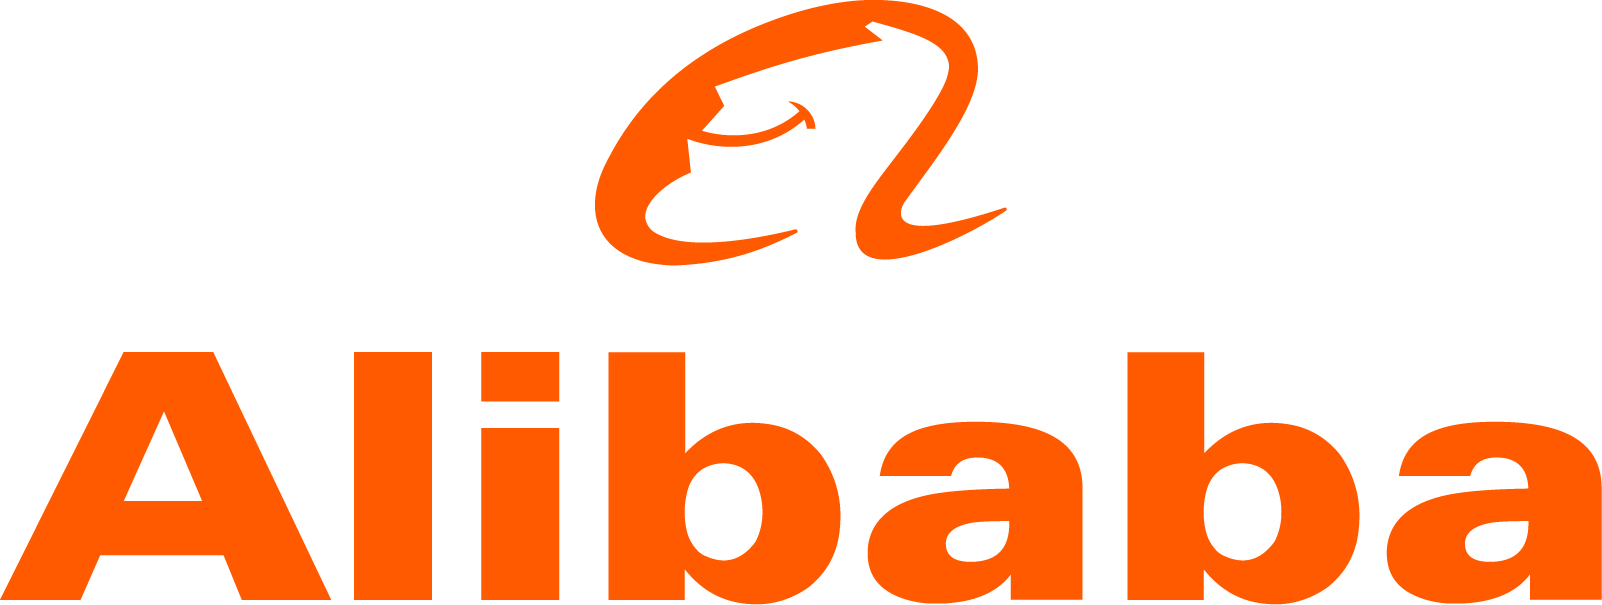 www.alibaba.com